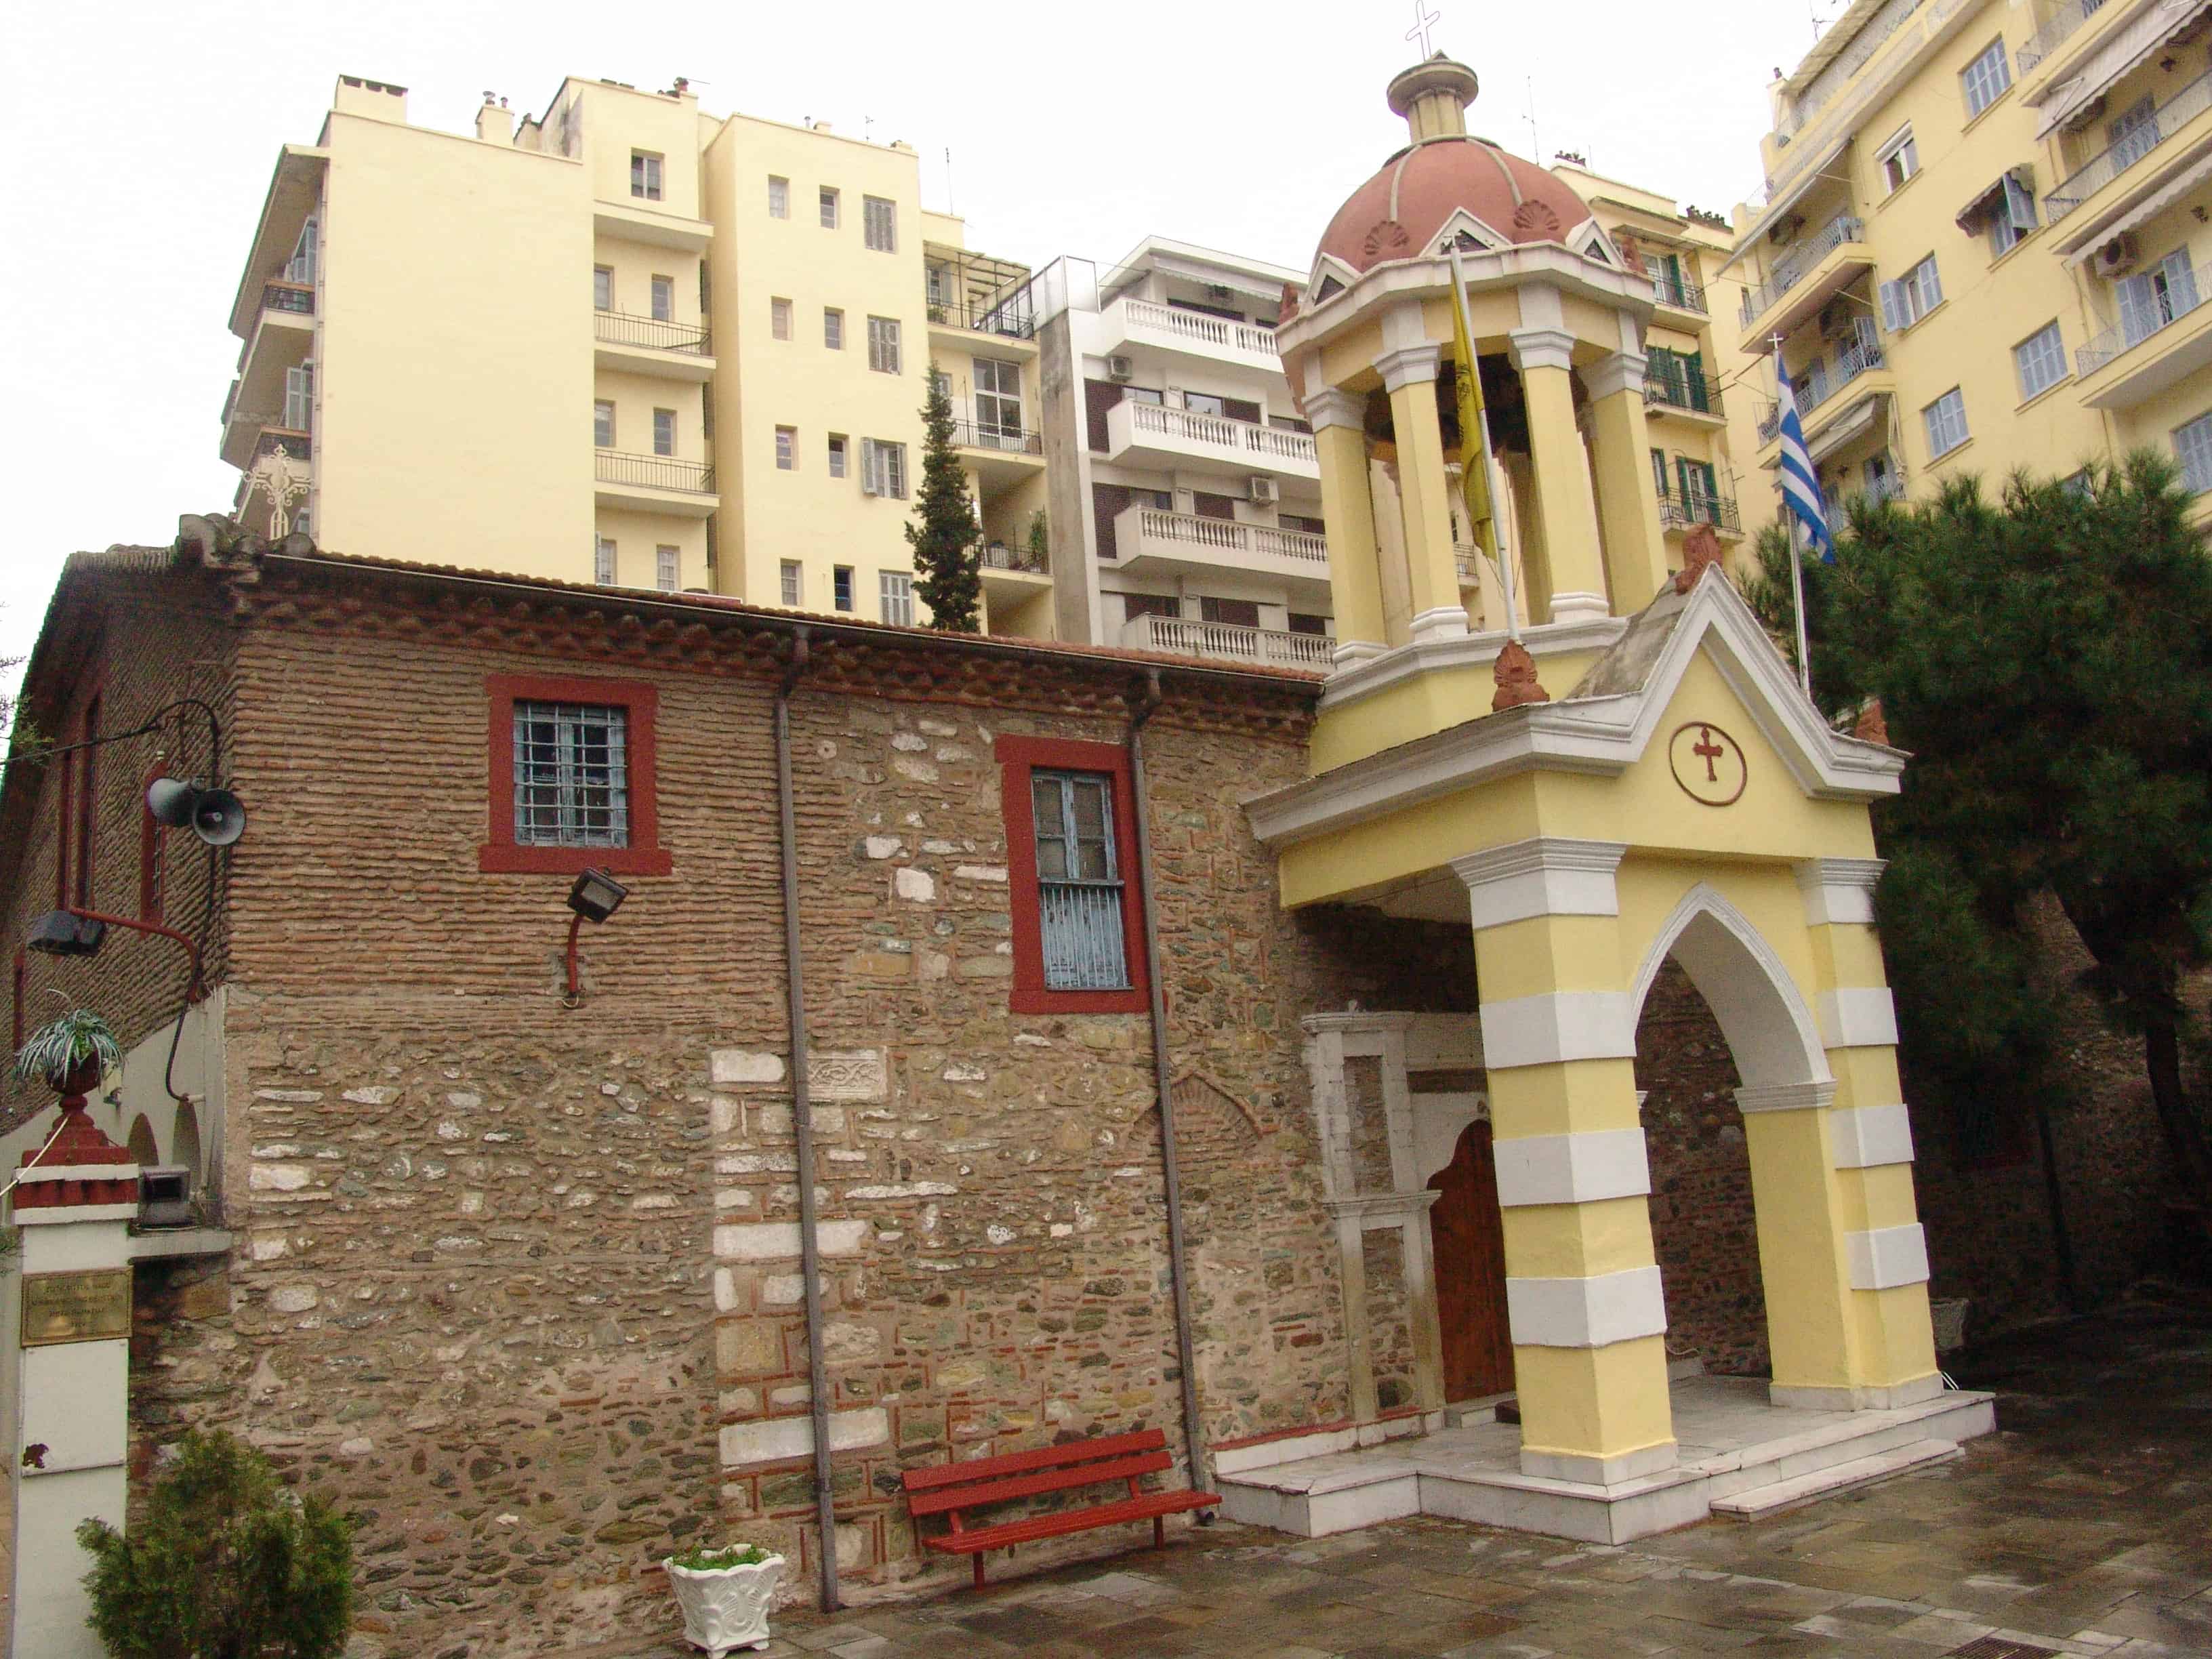 Church of Nea Panagia in Thessaloniki, Greece